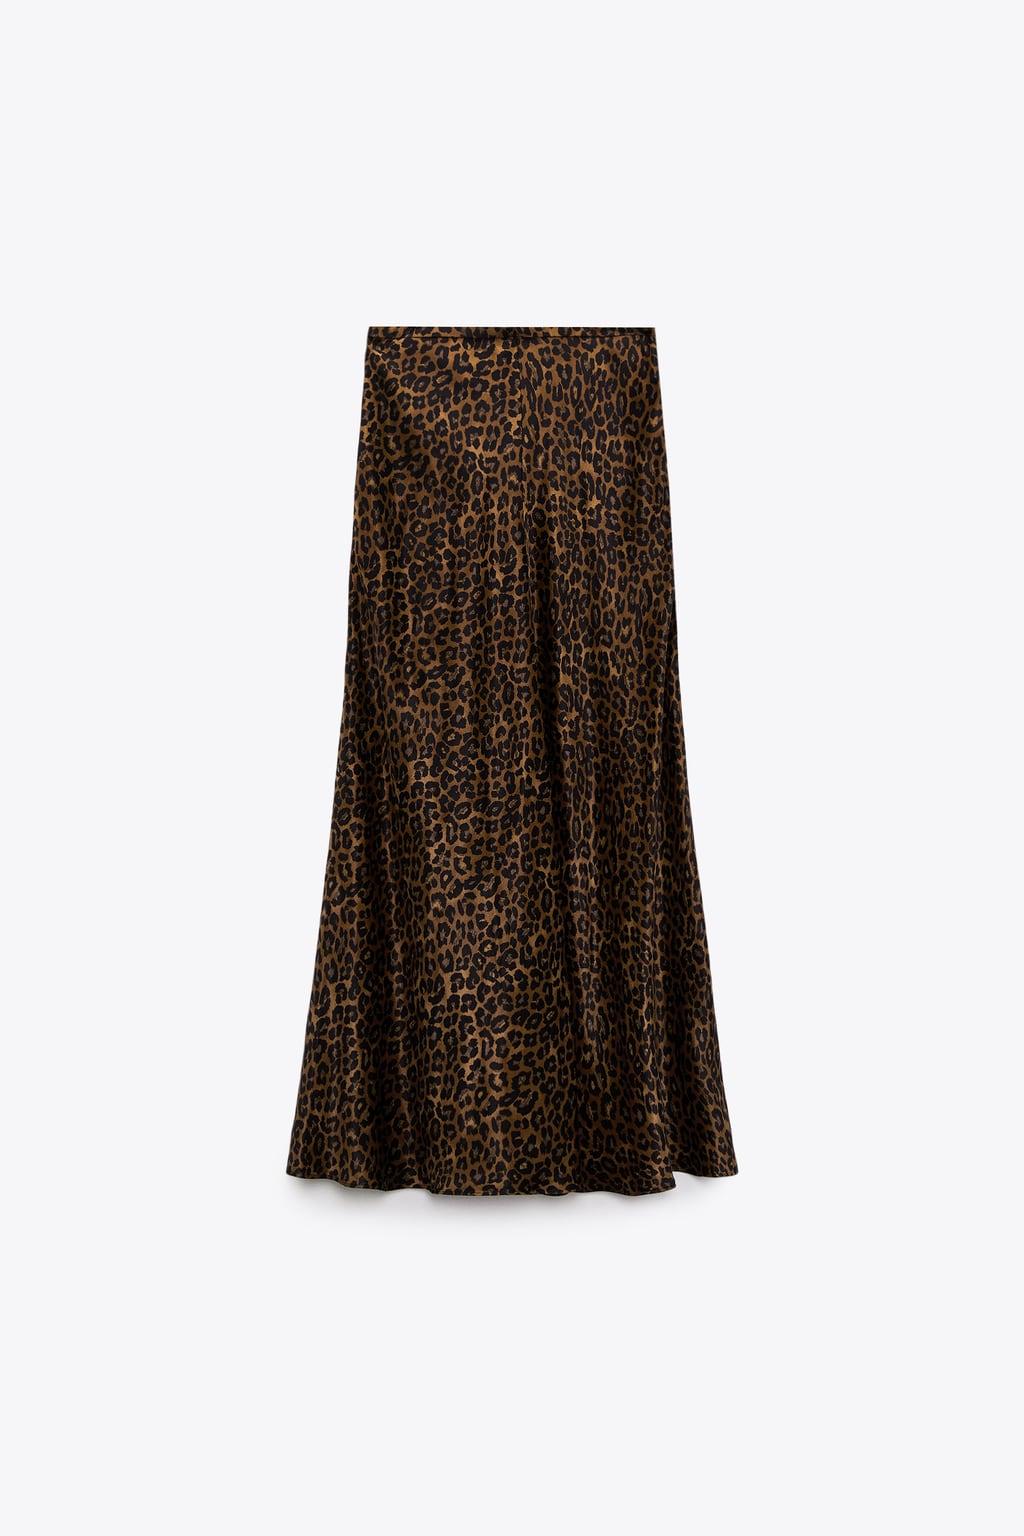 Zara leopard Print midi Skirt